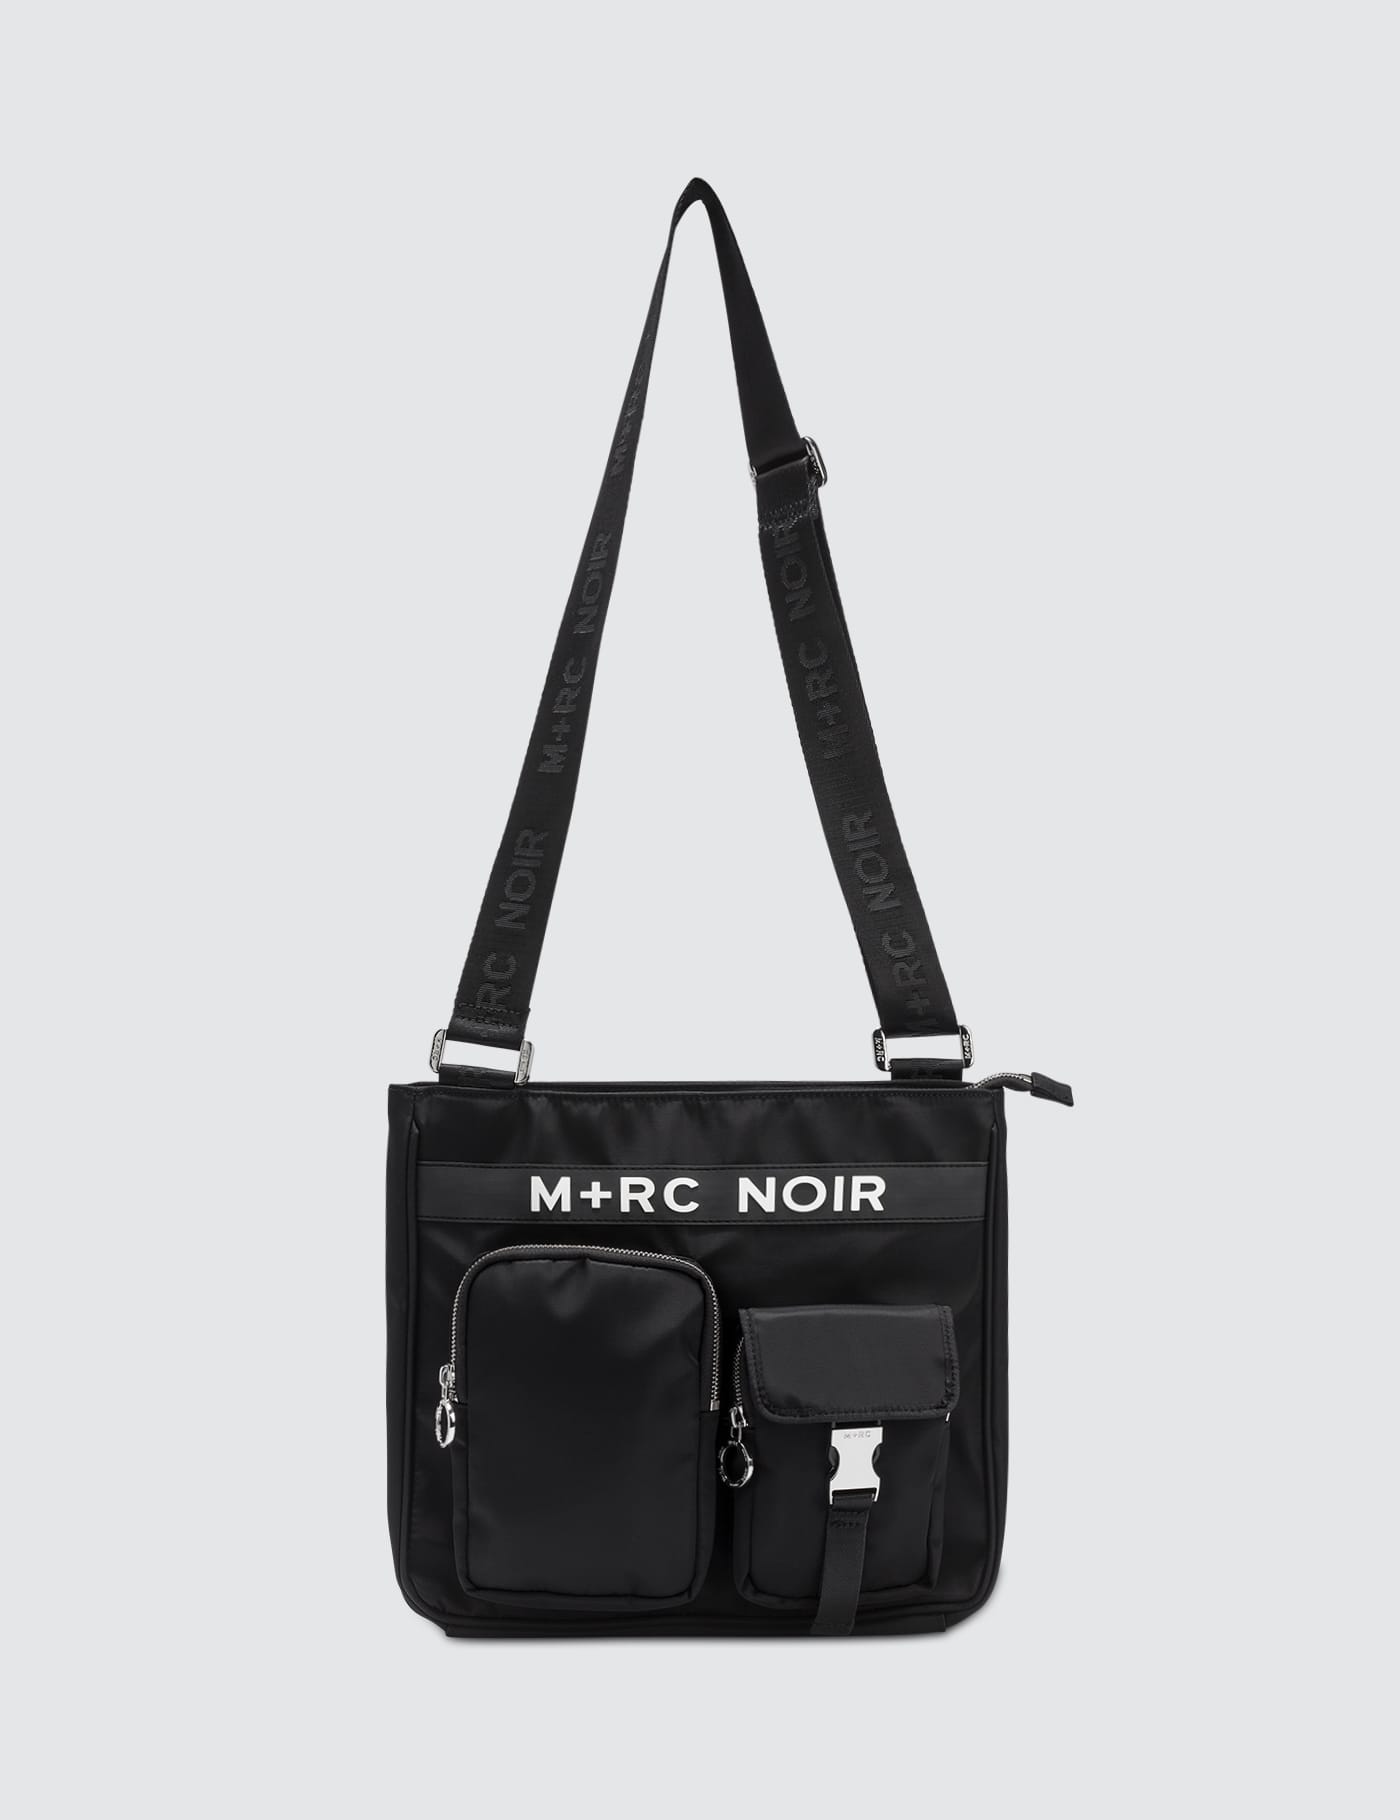 M+RC Noir - Mac-10 Messenger Bag | HBX - Globally Curated Fashion